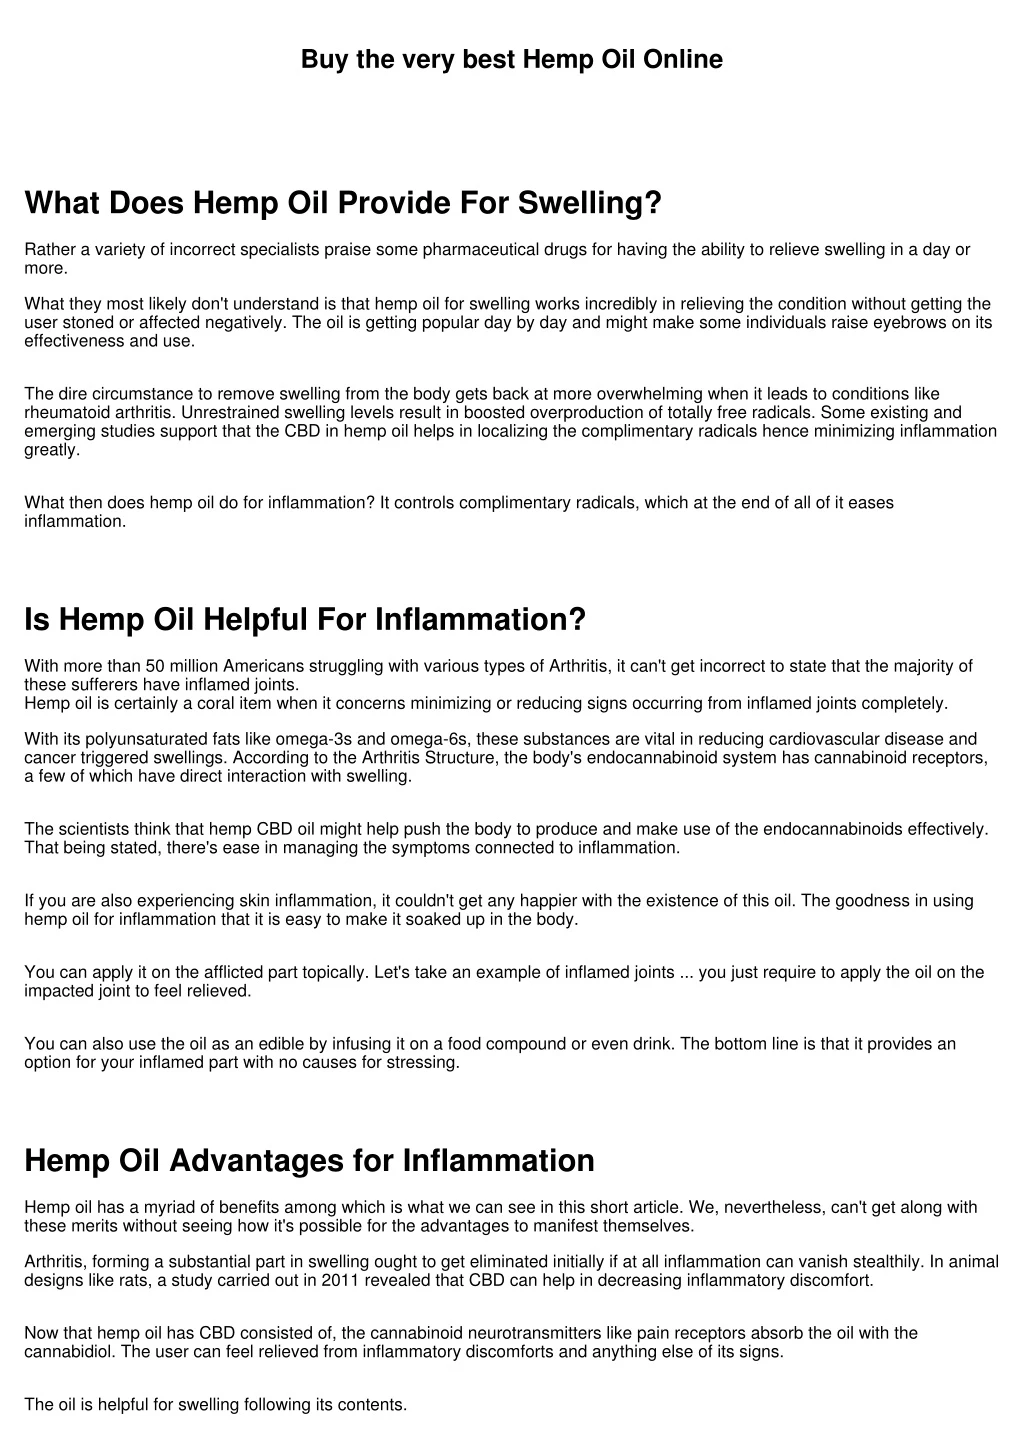 buy the very best hemp oil online